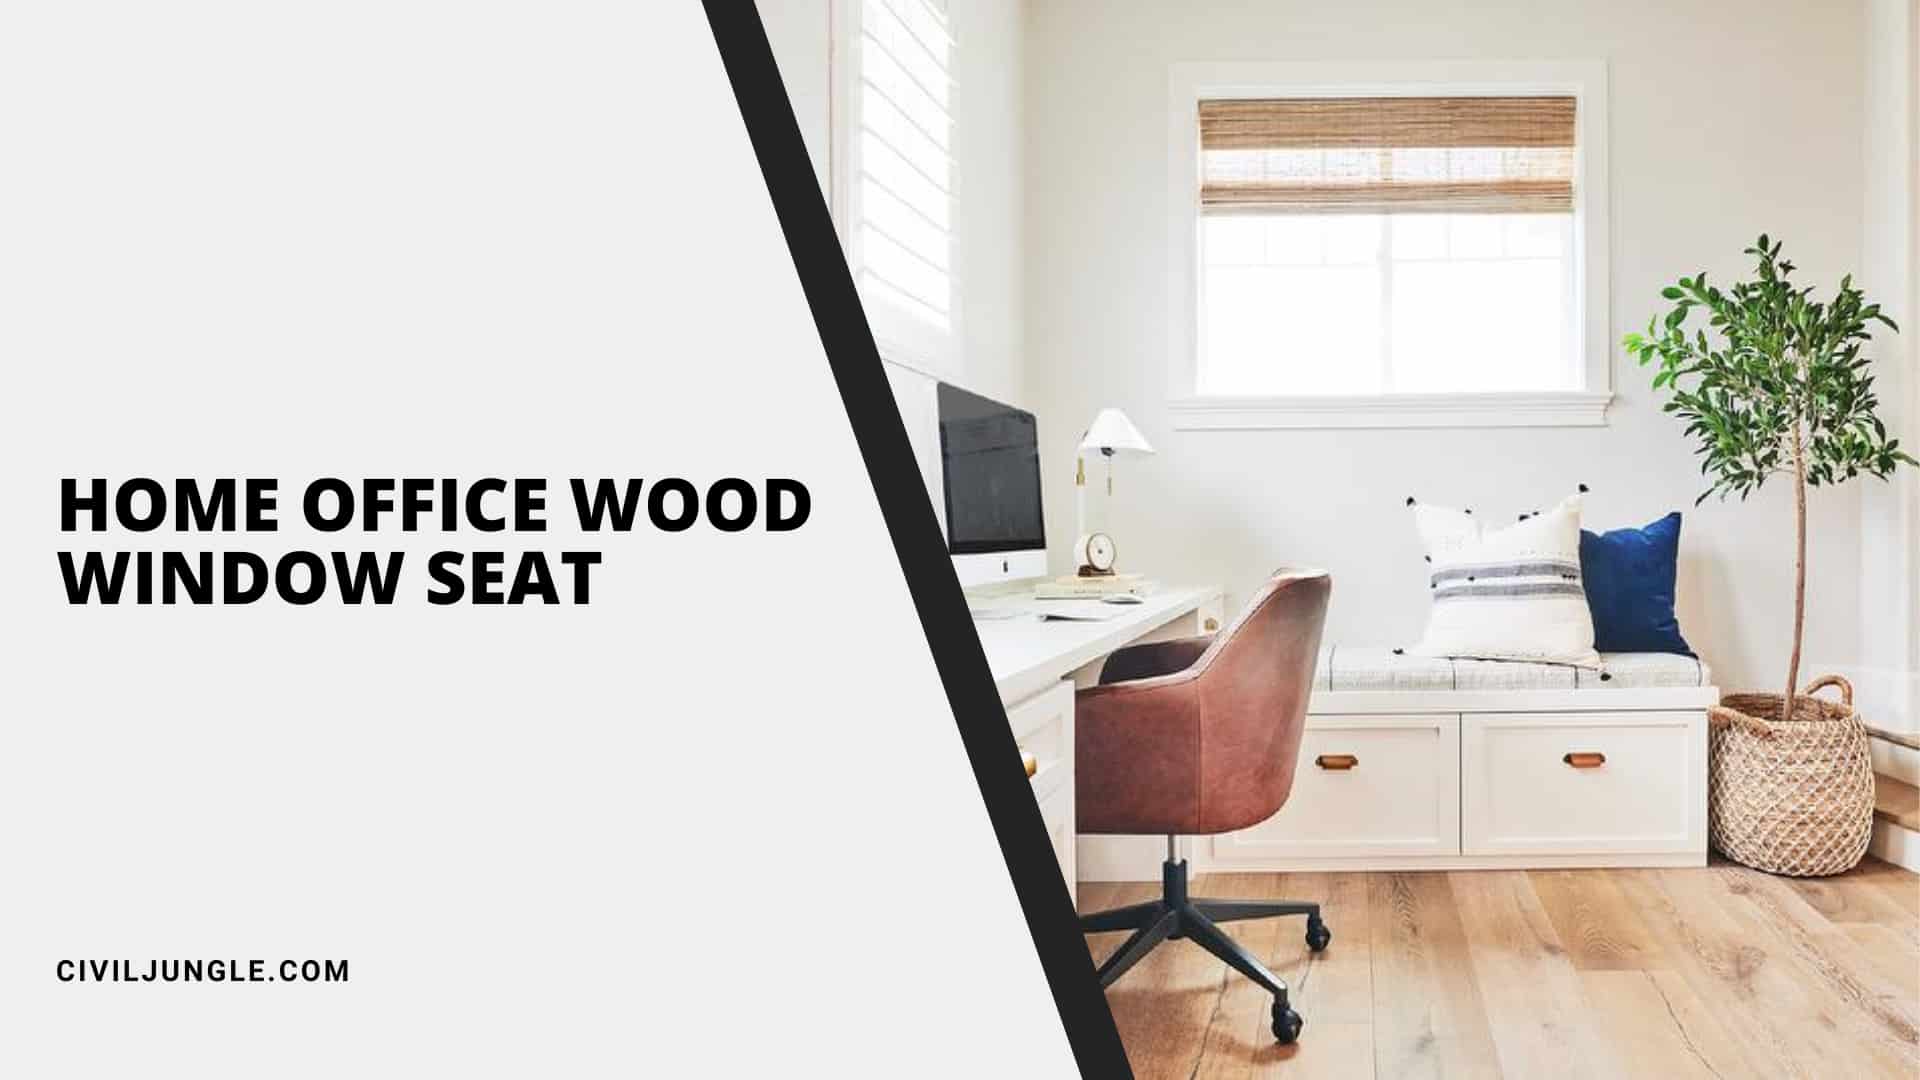 Home Office Wood Window Seat